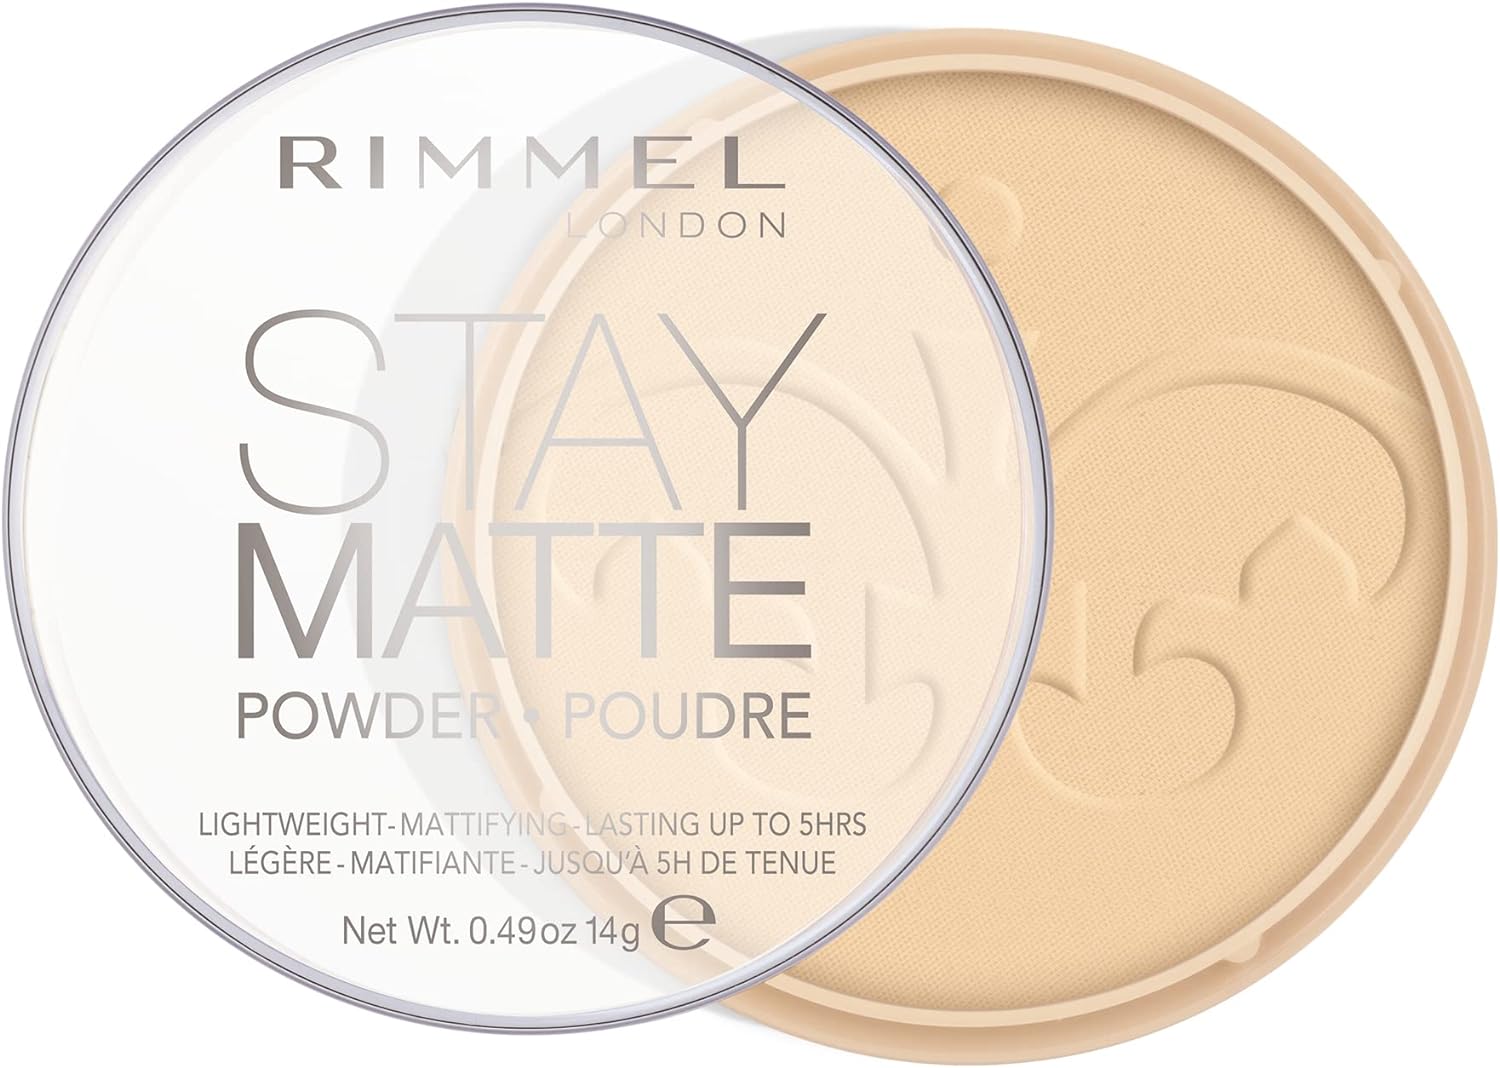 Rimmel Stay Matte Pressed Powder, Transparent, 14g